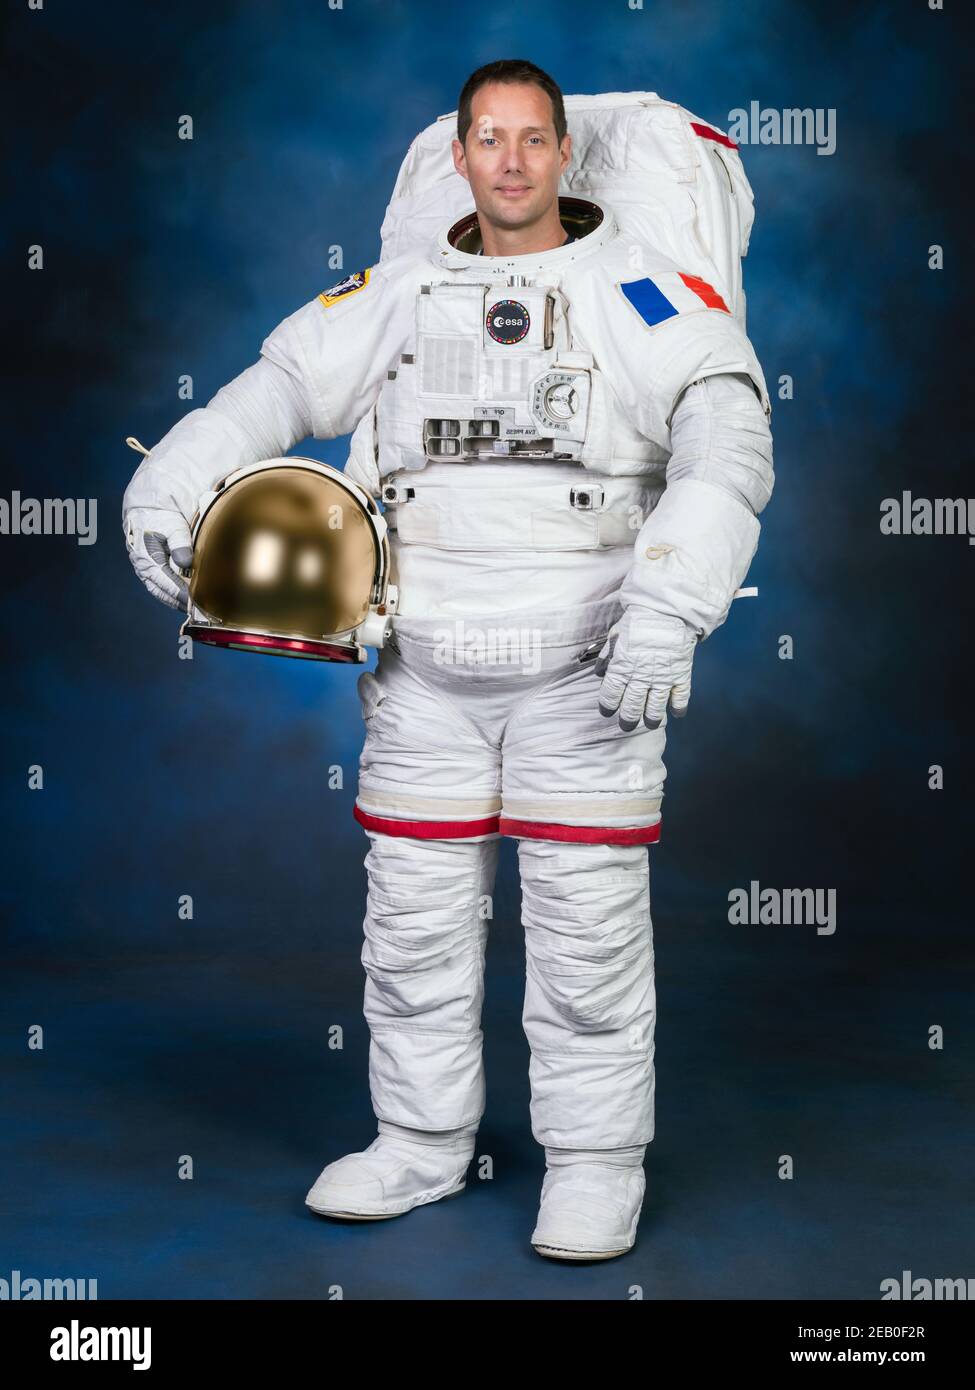 European Space Agency Astronaut und SpaceX Crew-2 Mission Specialist Thomas Pesquet Portrait in seinem NASA EVA Space Suit im Johnson Space Center 8. Dezember 2020 in Houston, Texas. Stockfoto